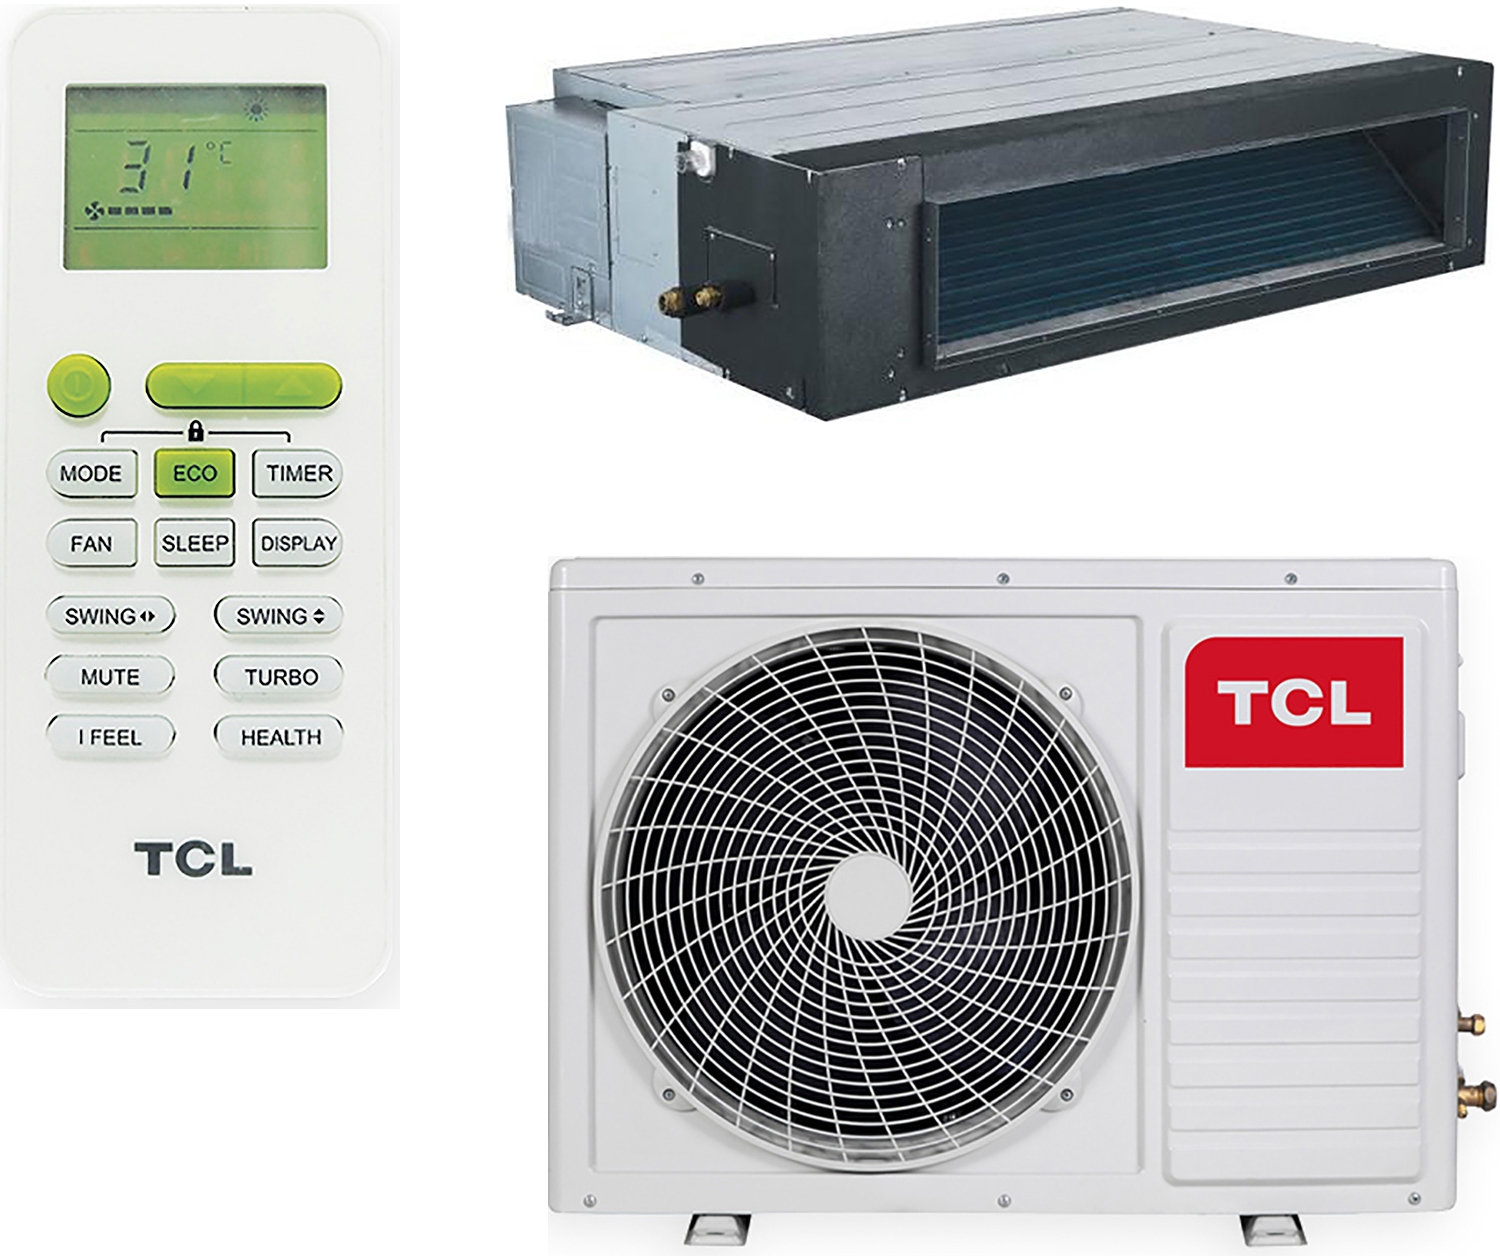 Кондиционер сплит-система TCL TCA-18D2HRA/DVI/TCA-18HA/DVO в интернет-магазине, главное фото